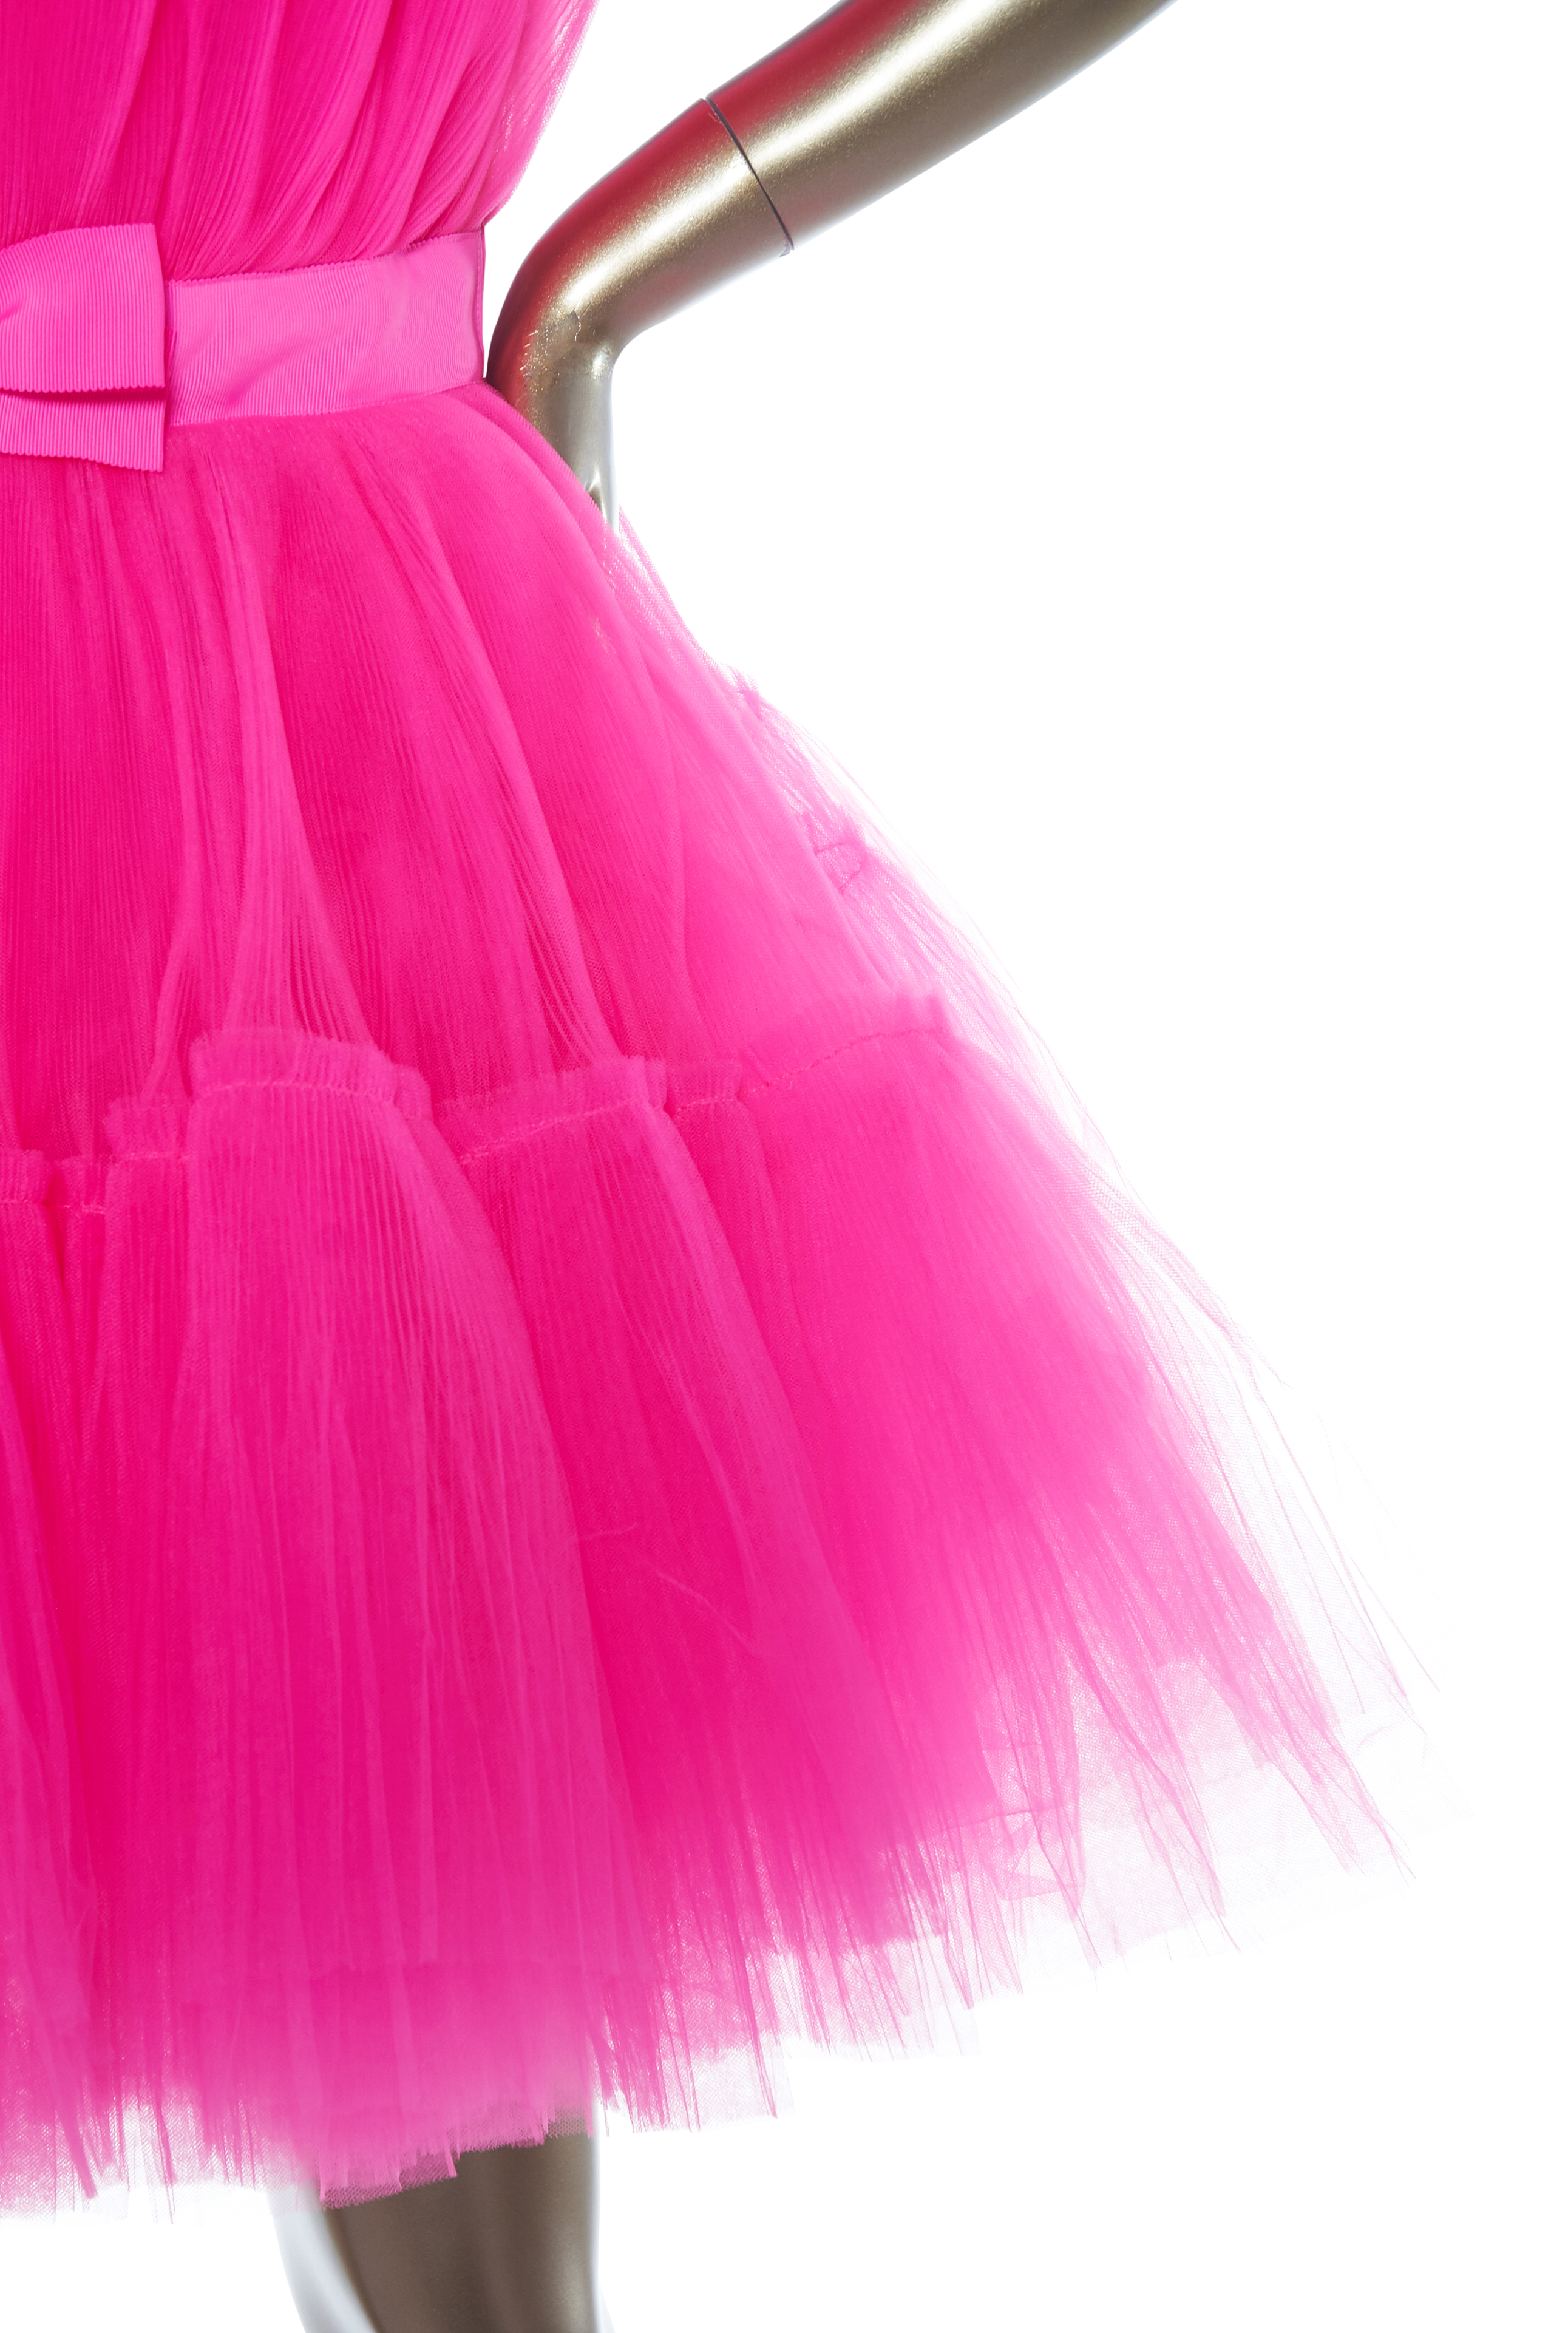 h&m pink dress